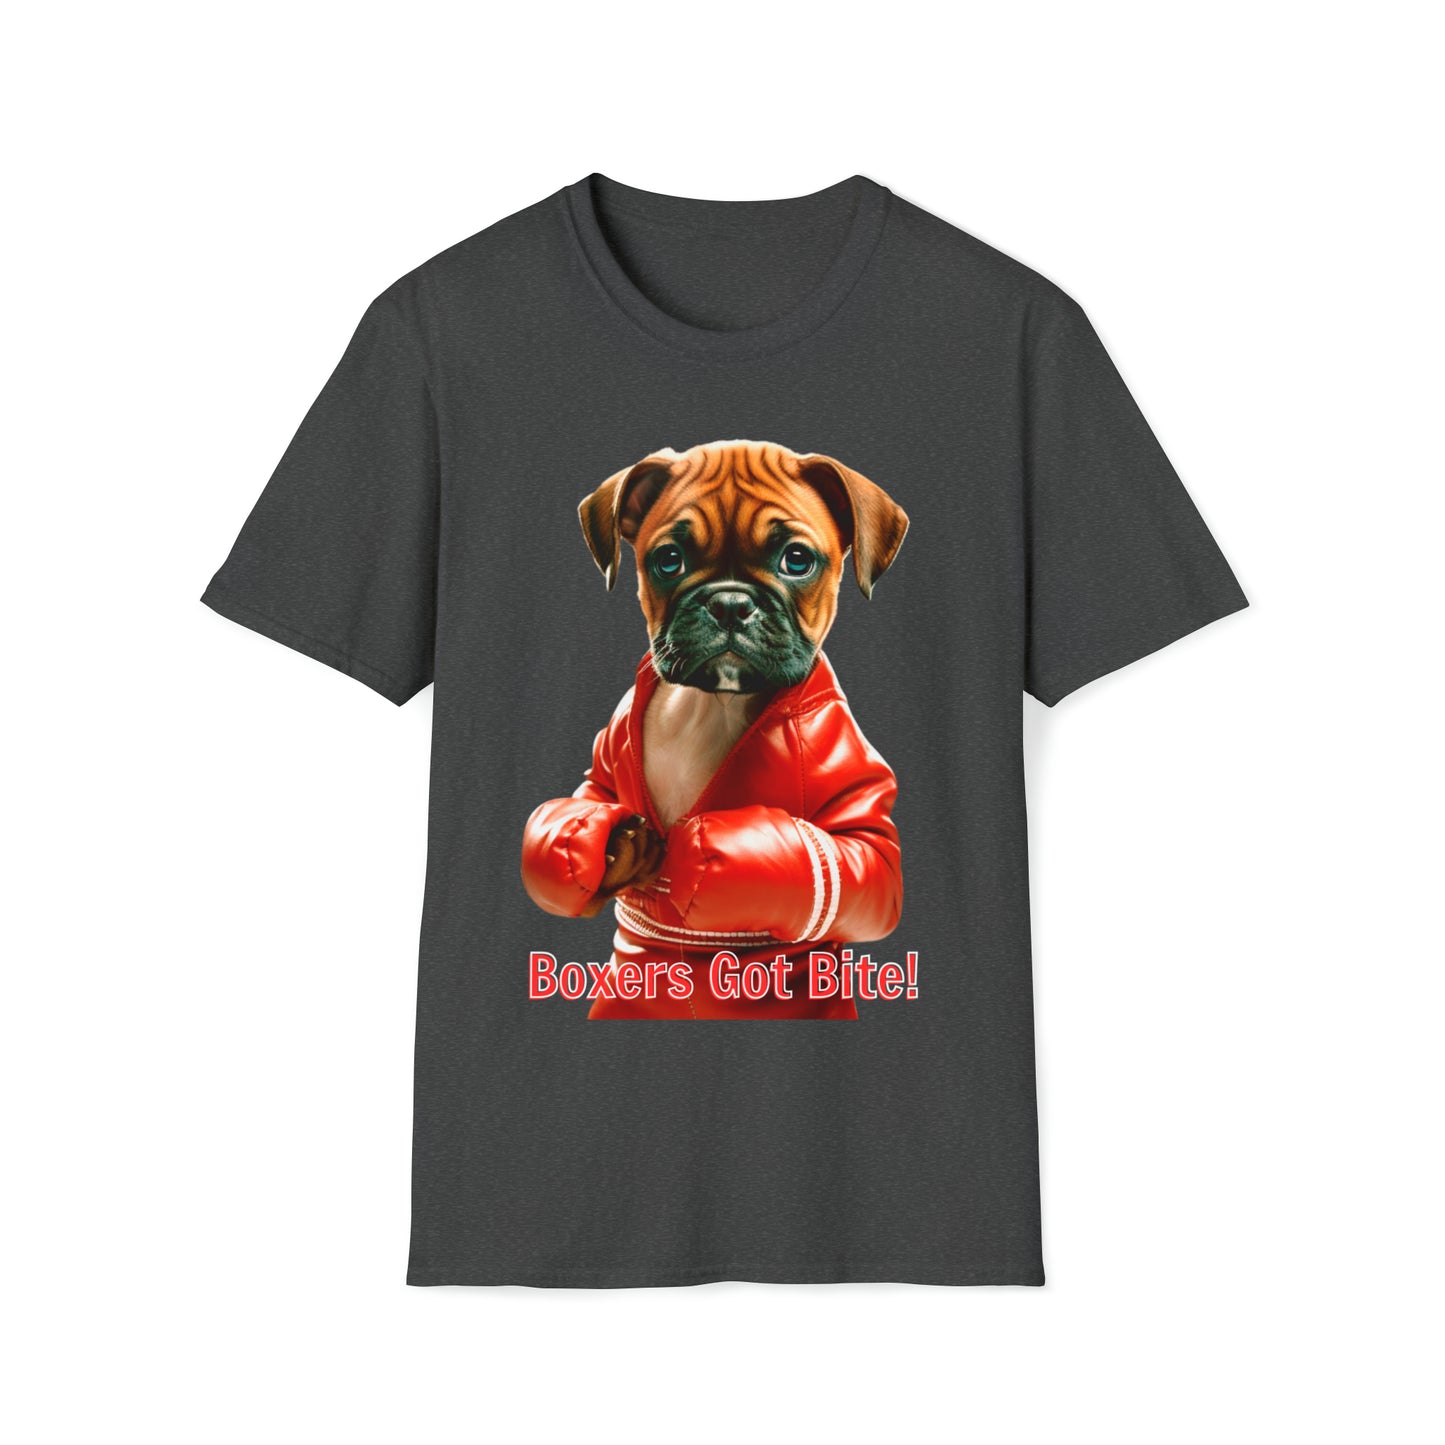 "Boxer's Got Bite!" Unisex Softstyle T-Shirt